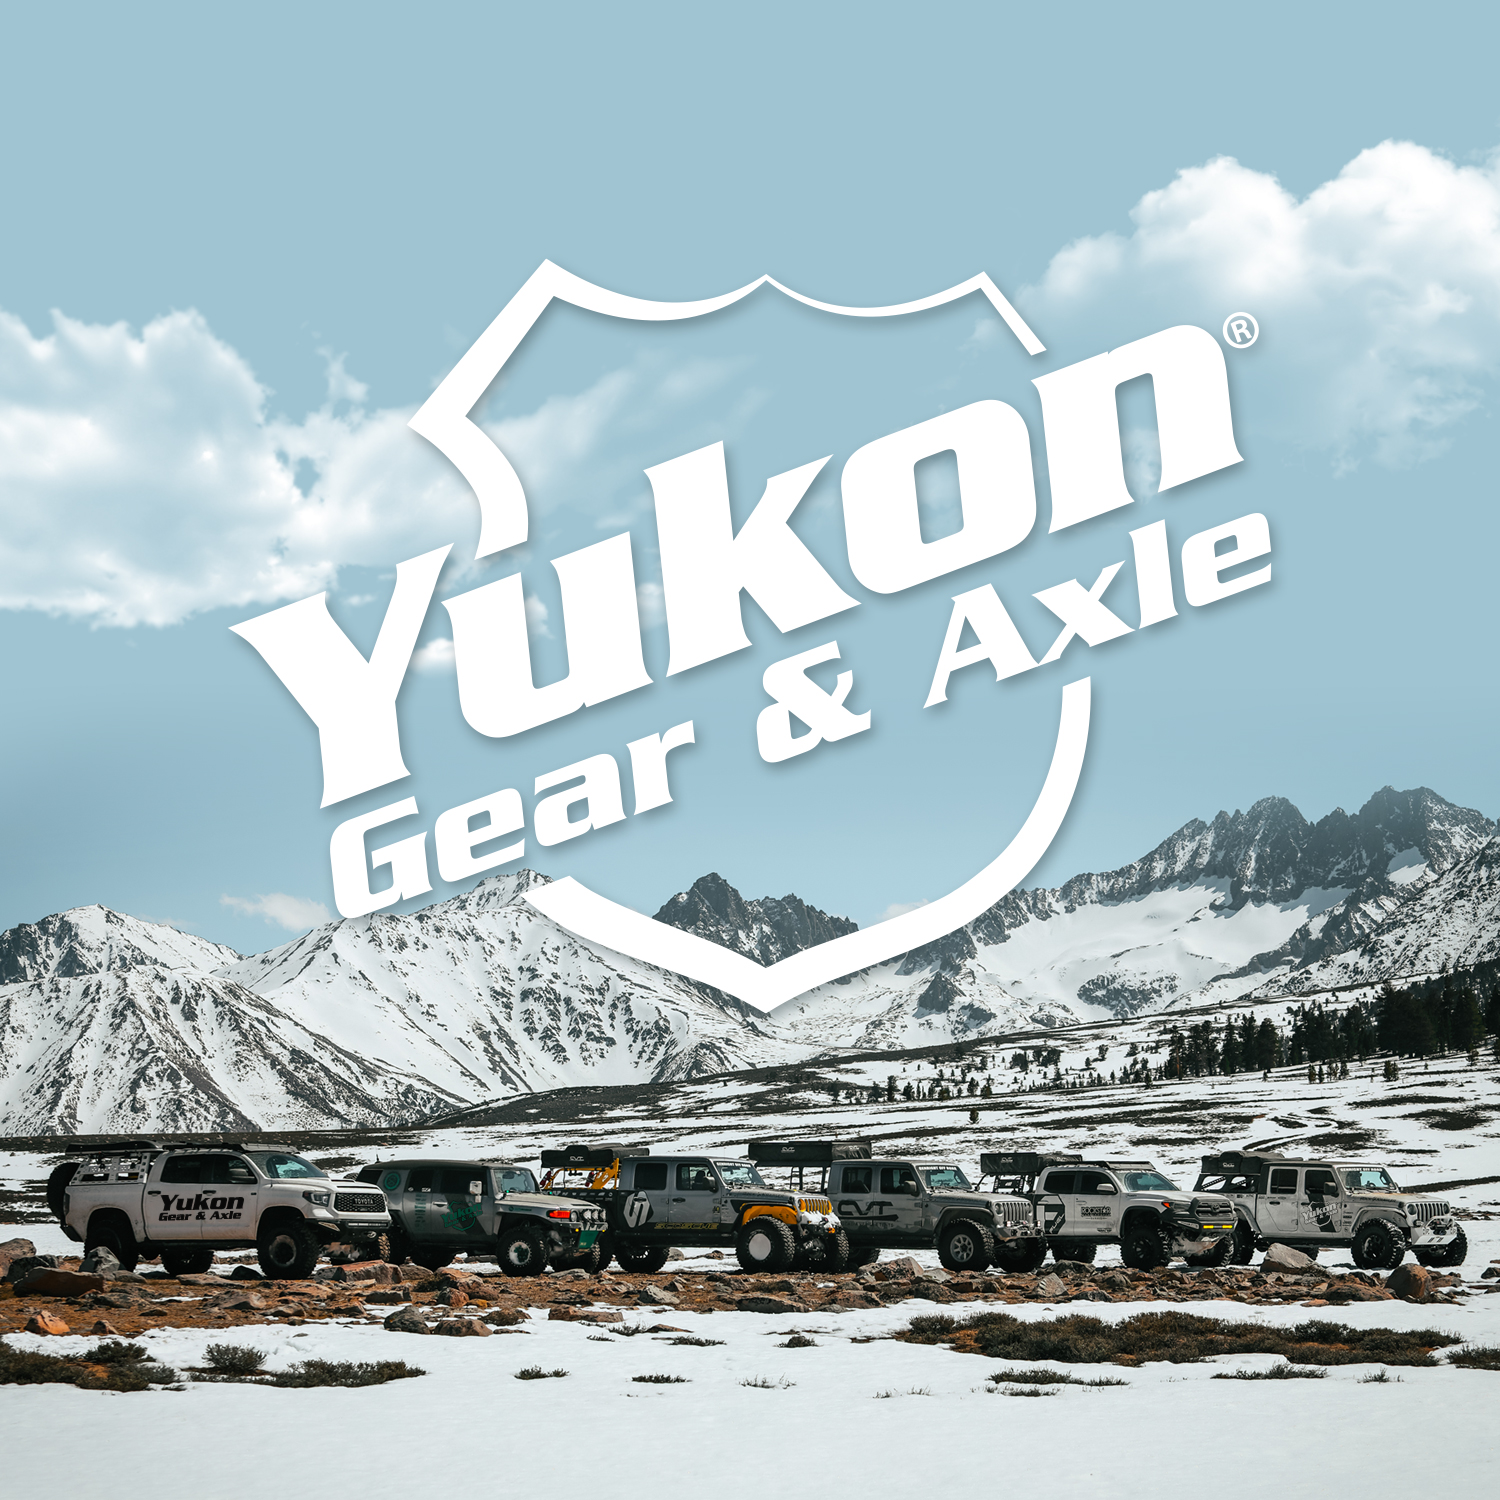 Yukon Carrier Installation Kit for Ford 9.75" 